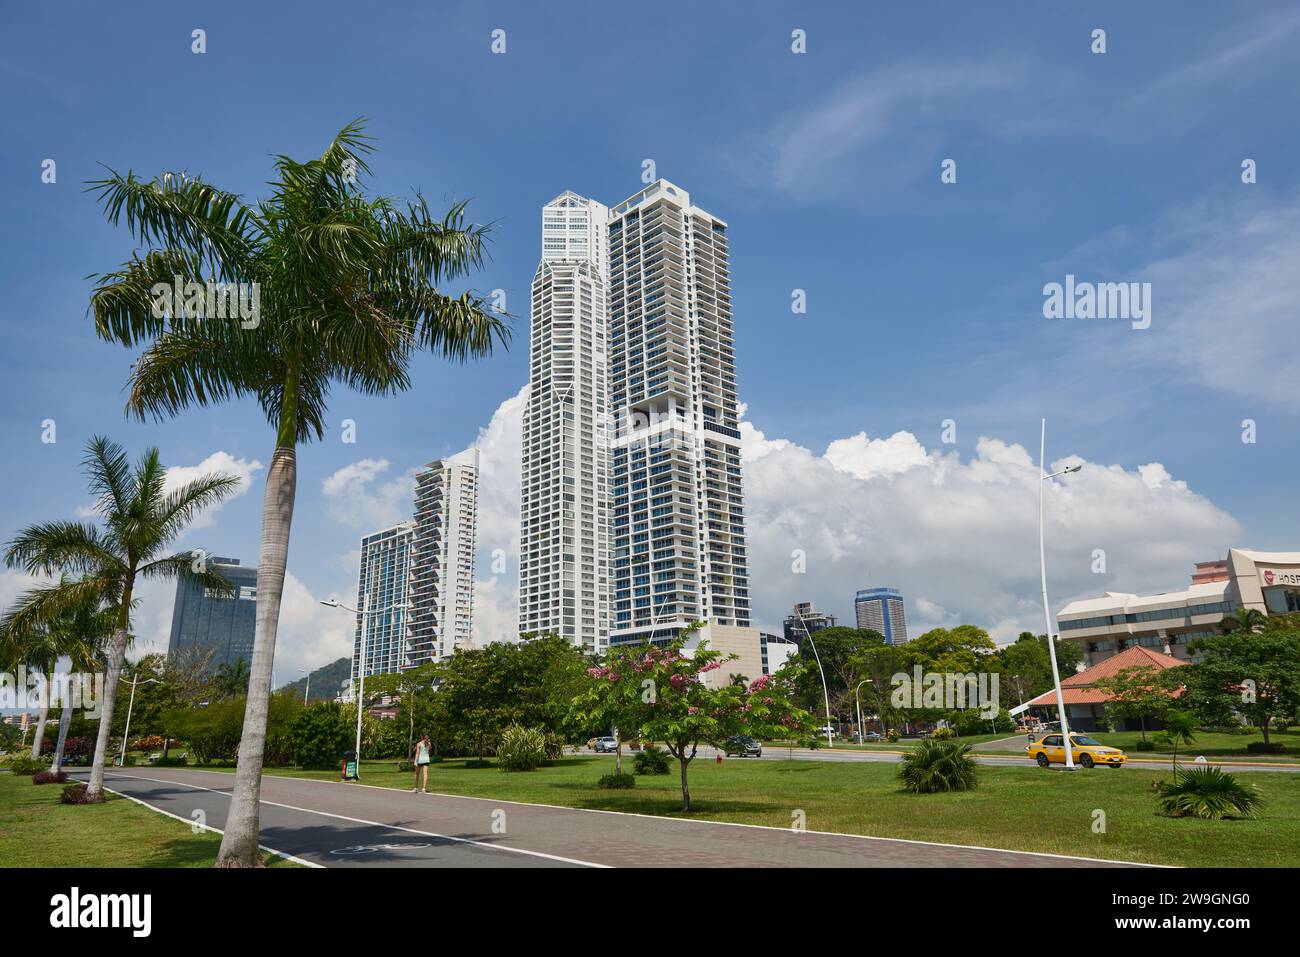 Green area and modern skyscrapers in Panama city, Republic of Panama, Central America, America Stock Photo